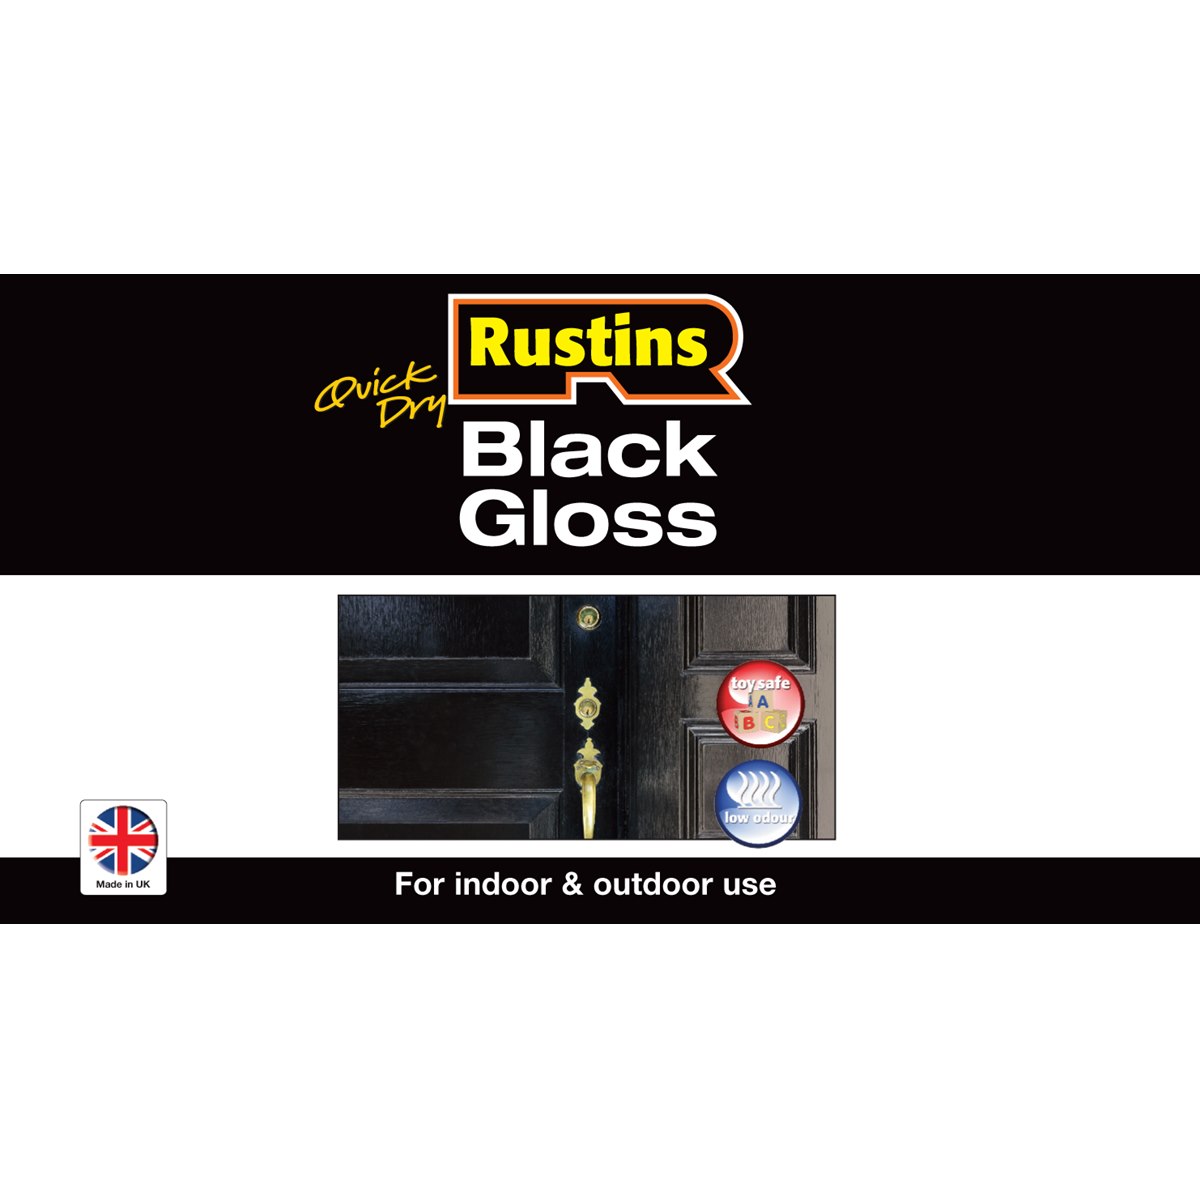 Rustins Black Gloss Paint